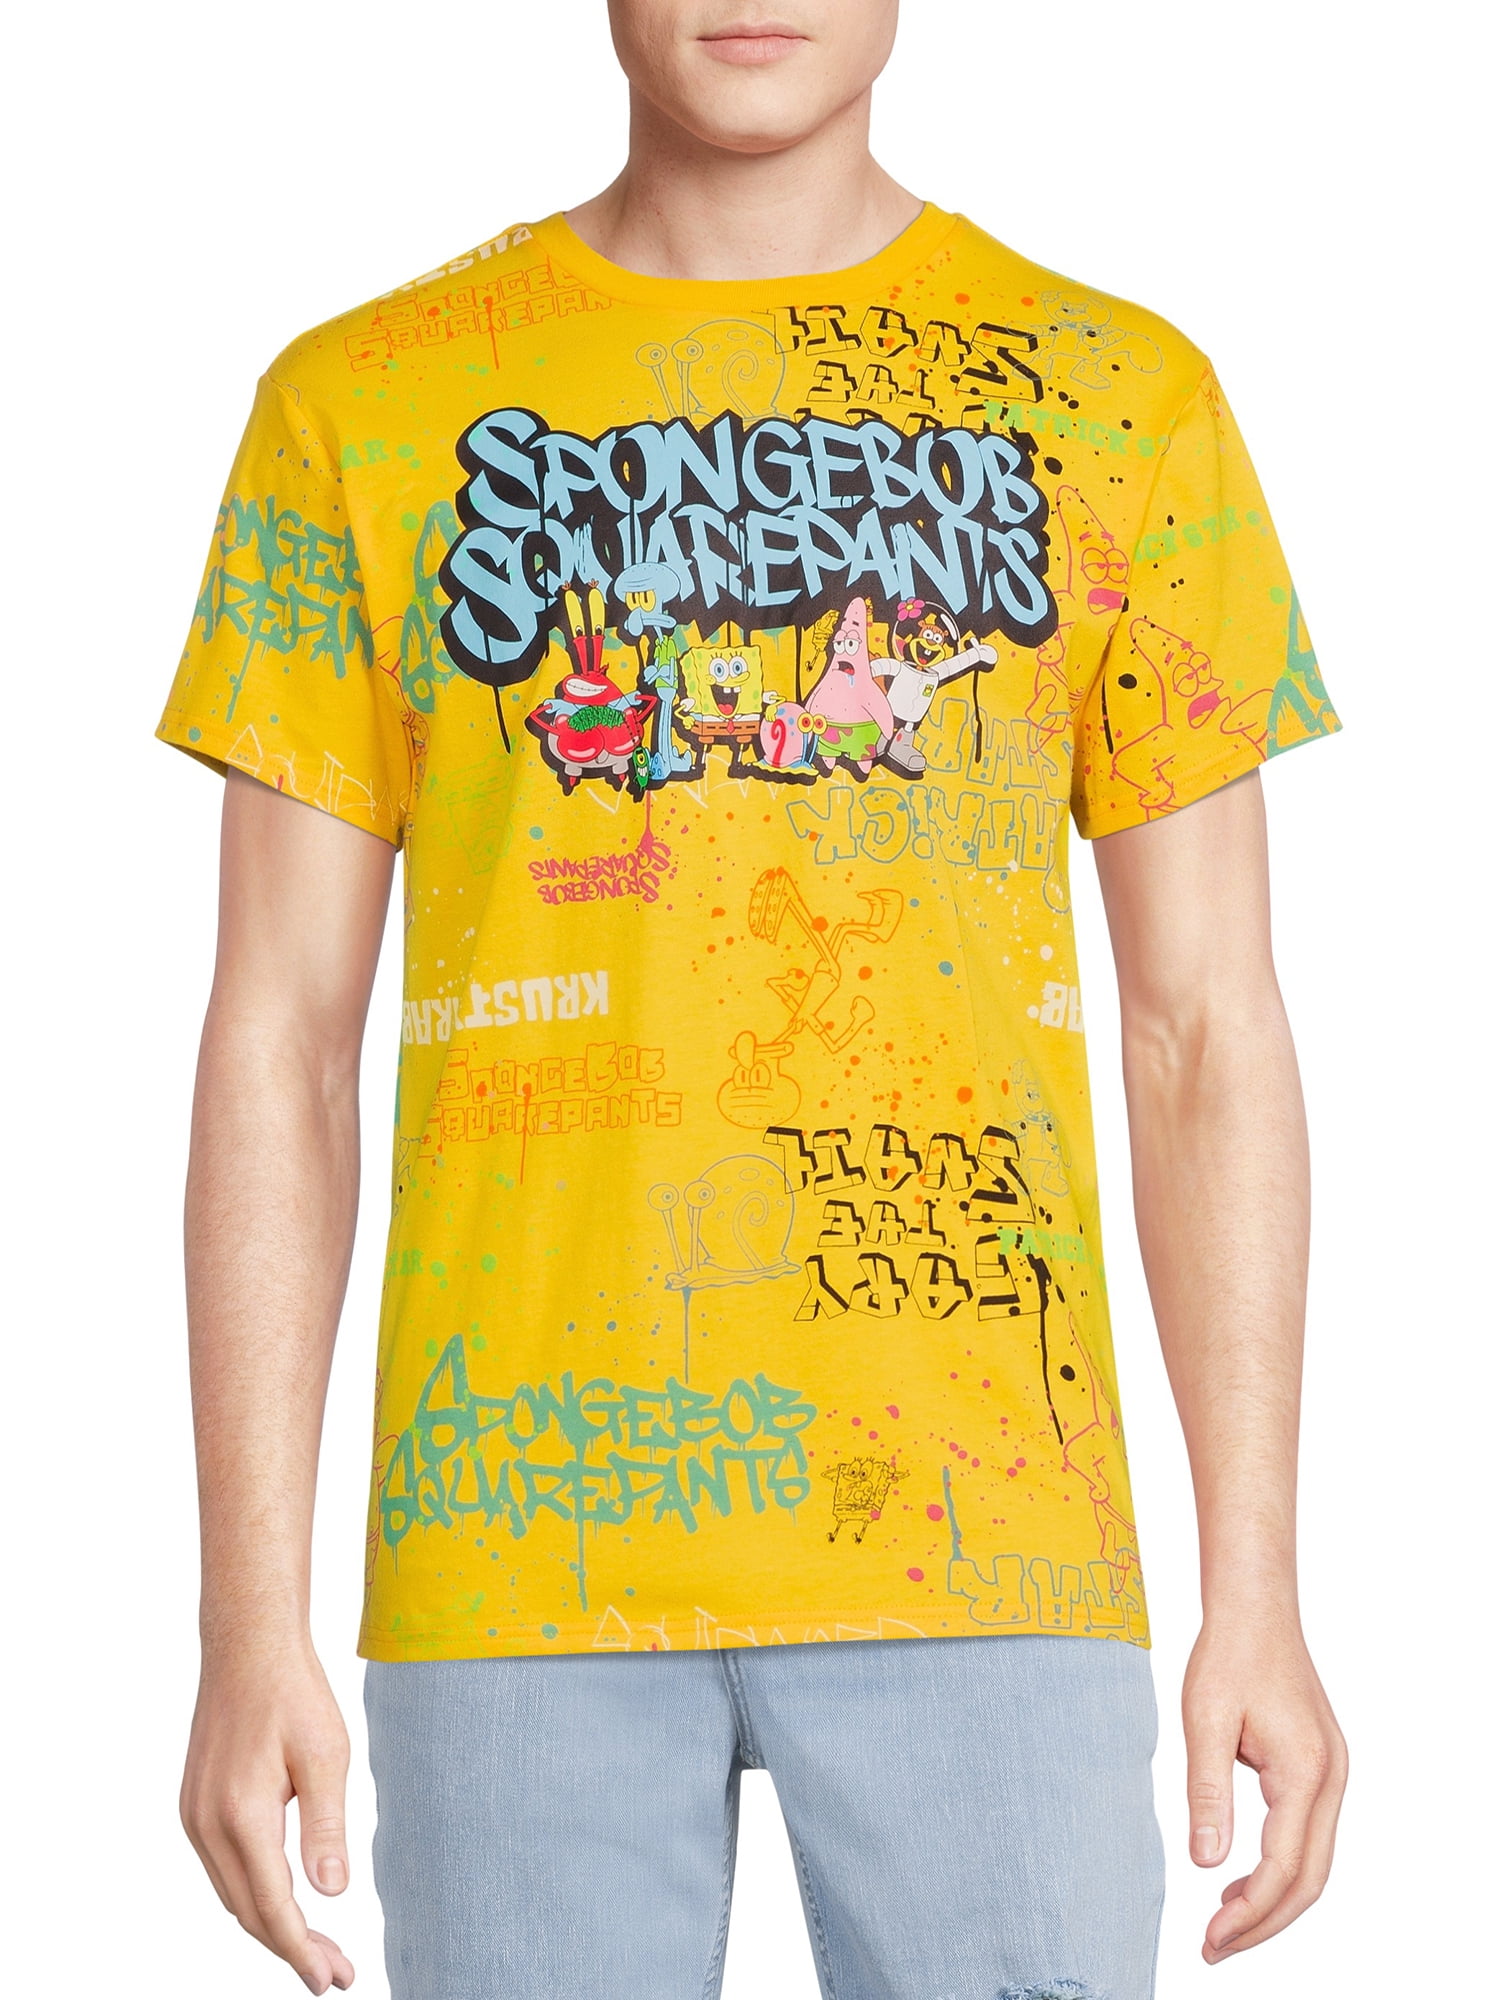 SpongeBob SquarePants Men’s Graffiti Graphic T-Shirt with Short Sleeves ...